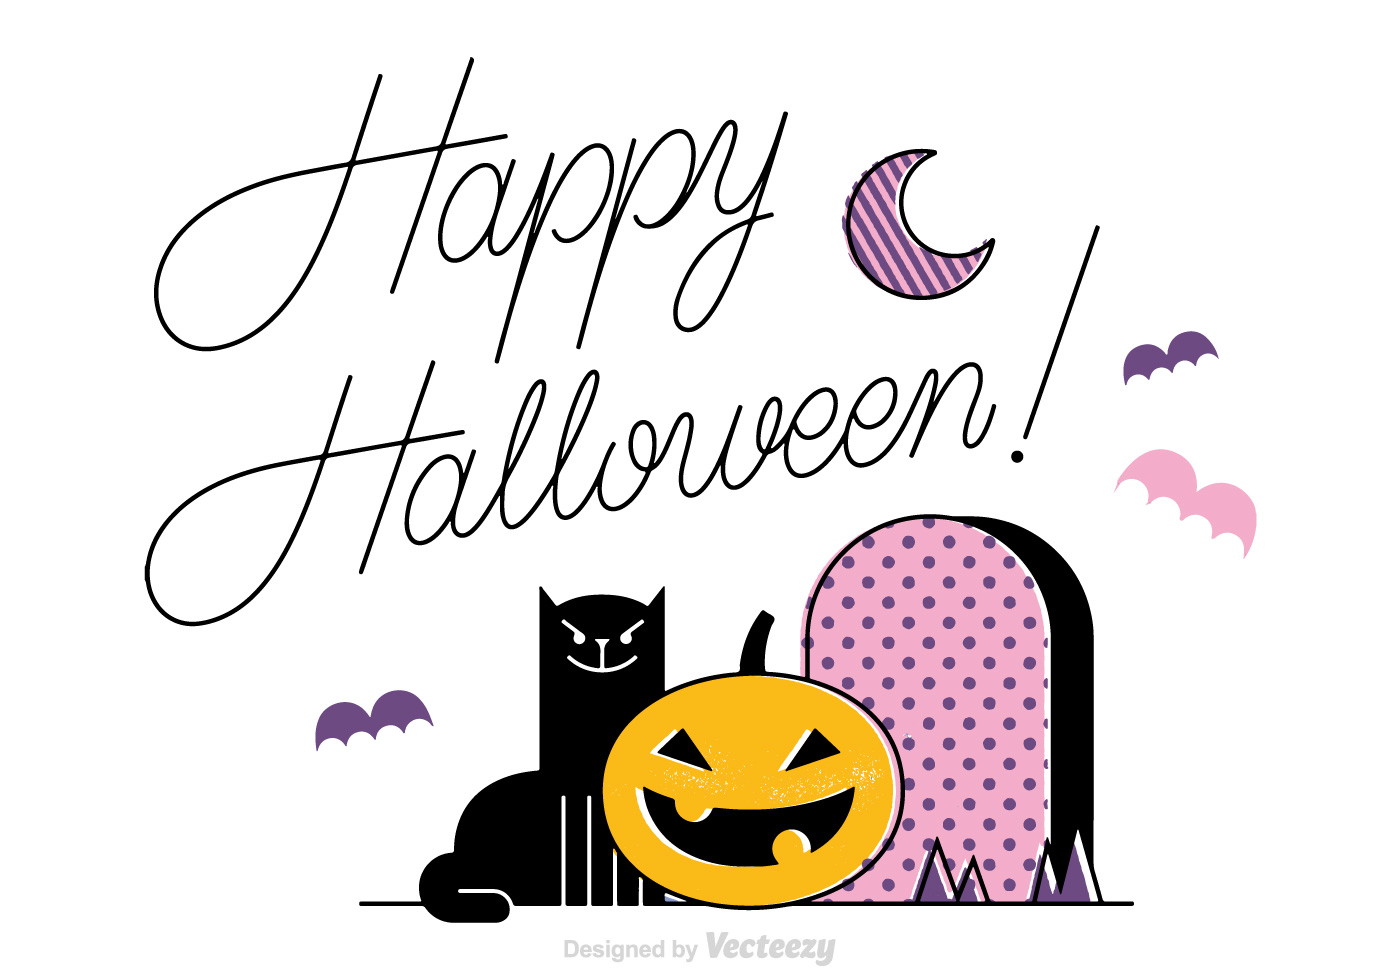 Download Free Happy Halloween Vector Background - Download Free ...